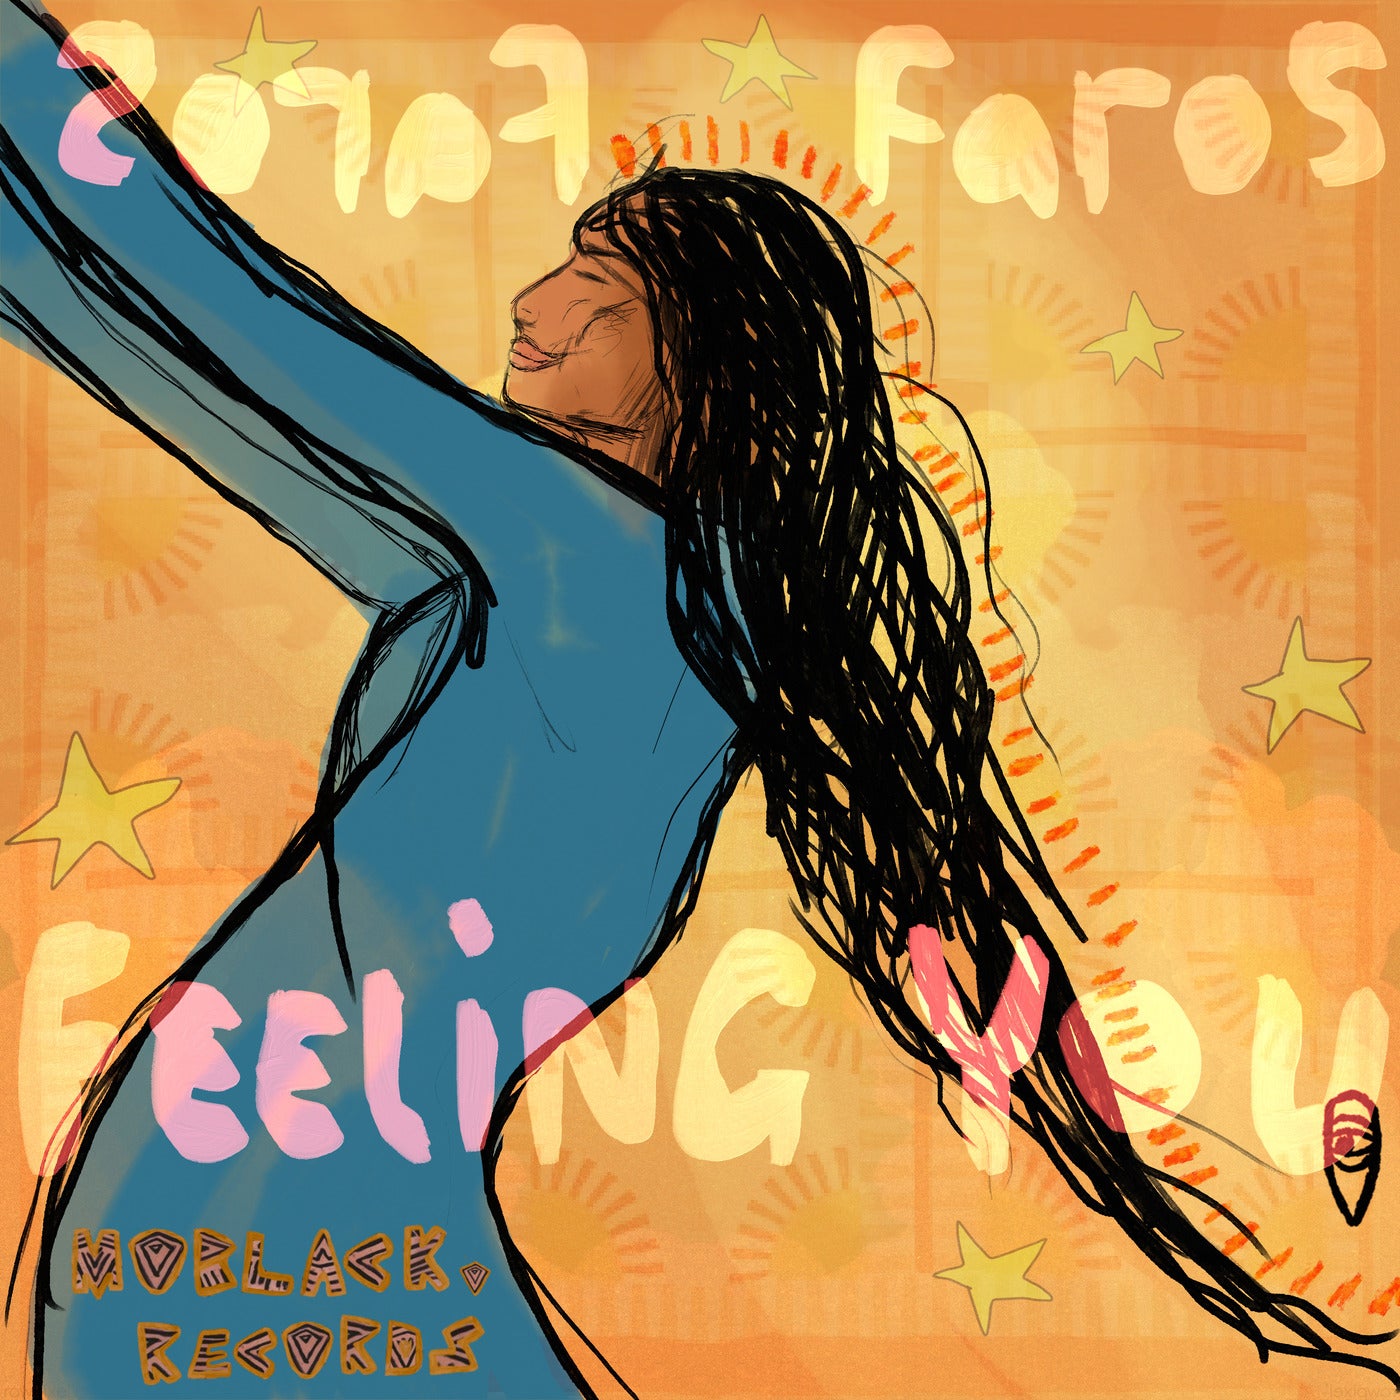 Faros - Feeling You on MoBlack Records